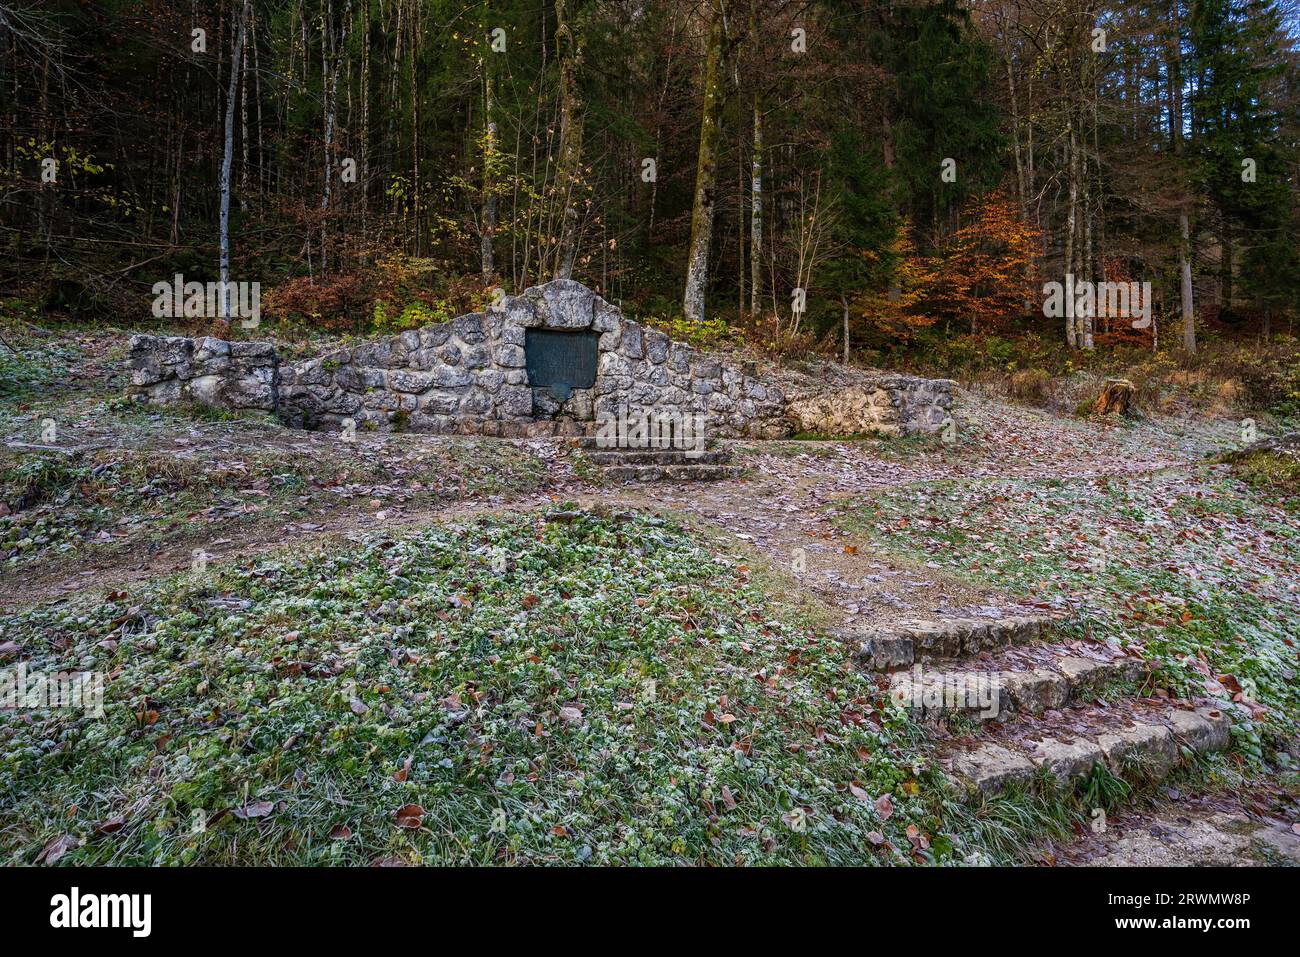 Gedenkbrunnen in den Salzminen Hallstatt - Hallstatt, Österreich Stockfoto